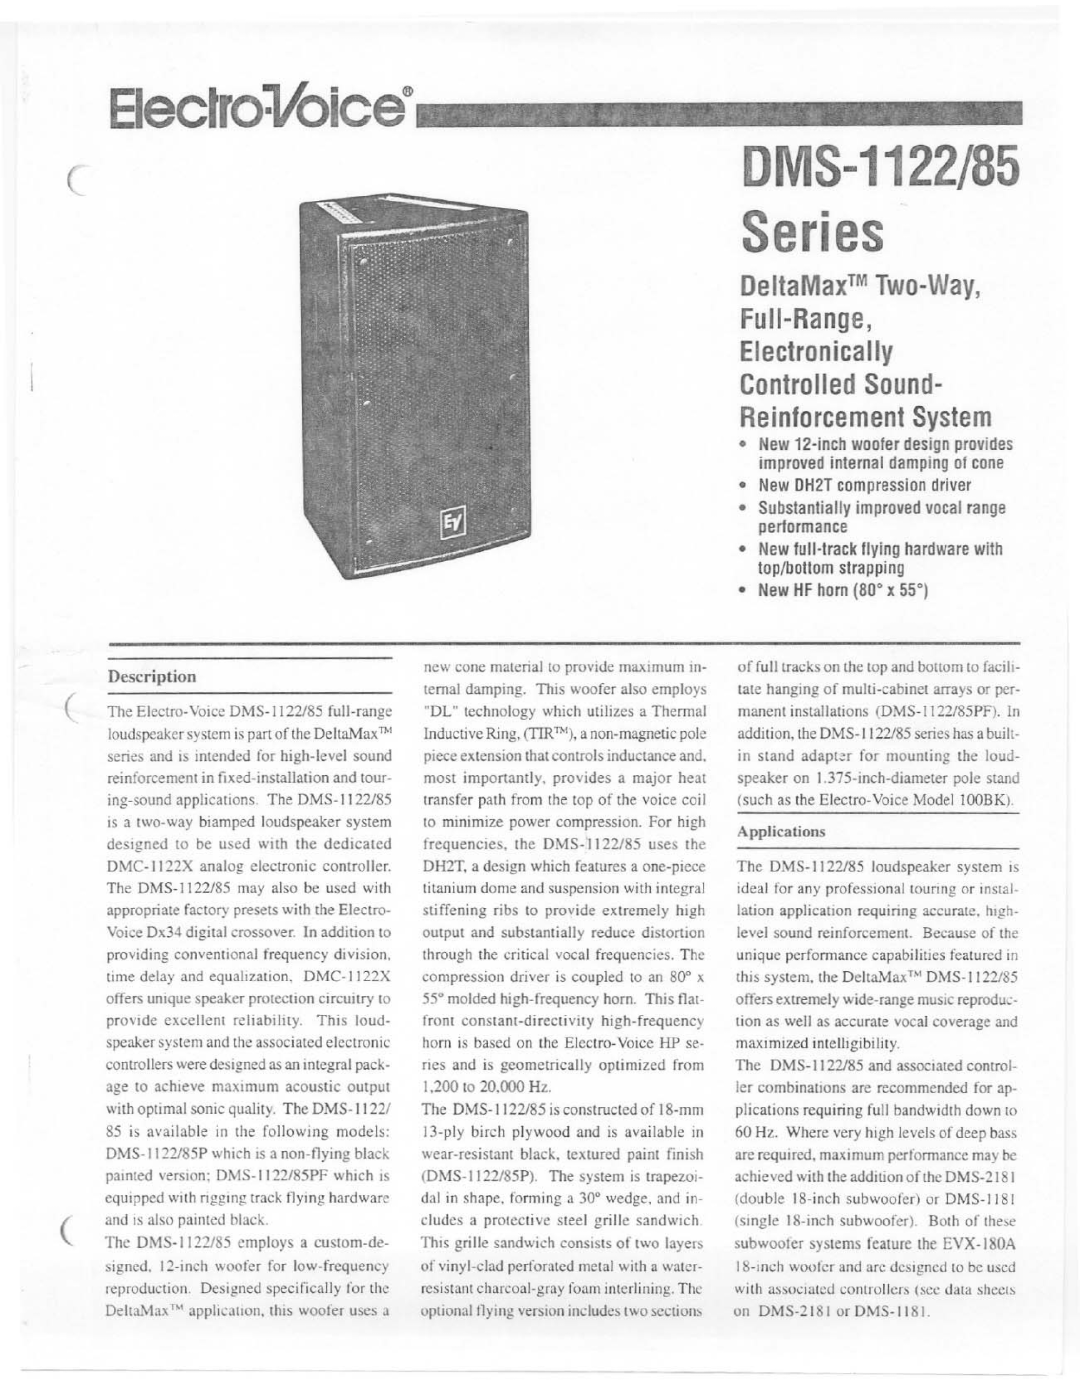 Electro-Voice DMS-1122/85 manual 